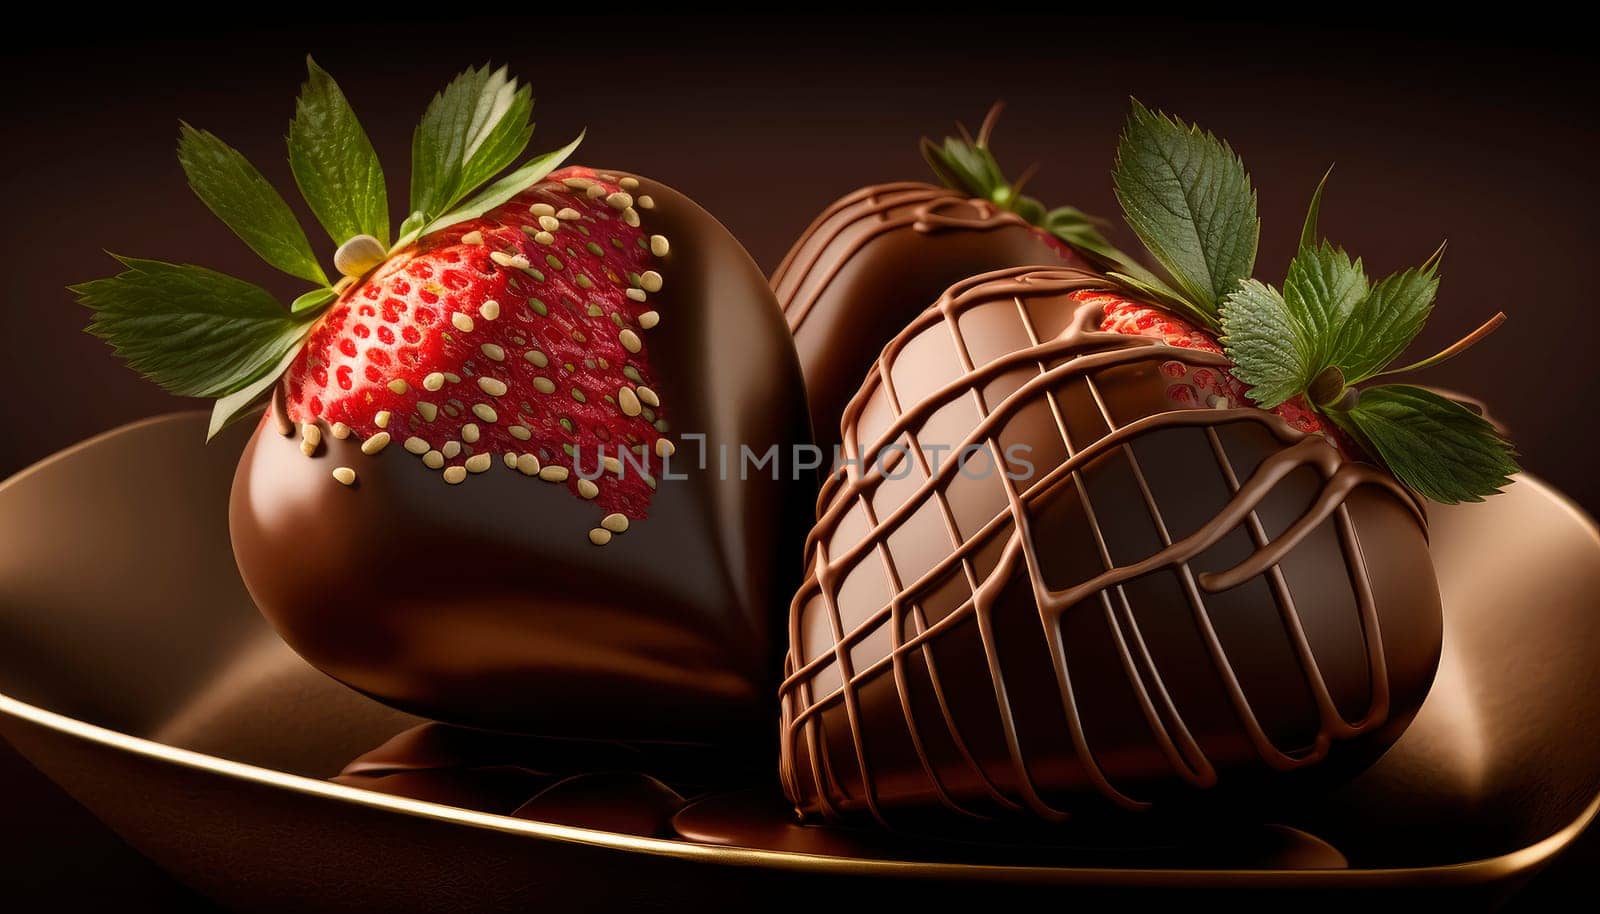 Chocolate covered strawberries dessert for valentine's day. by yanadjana